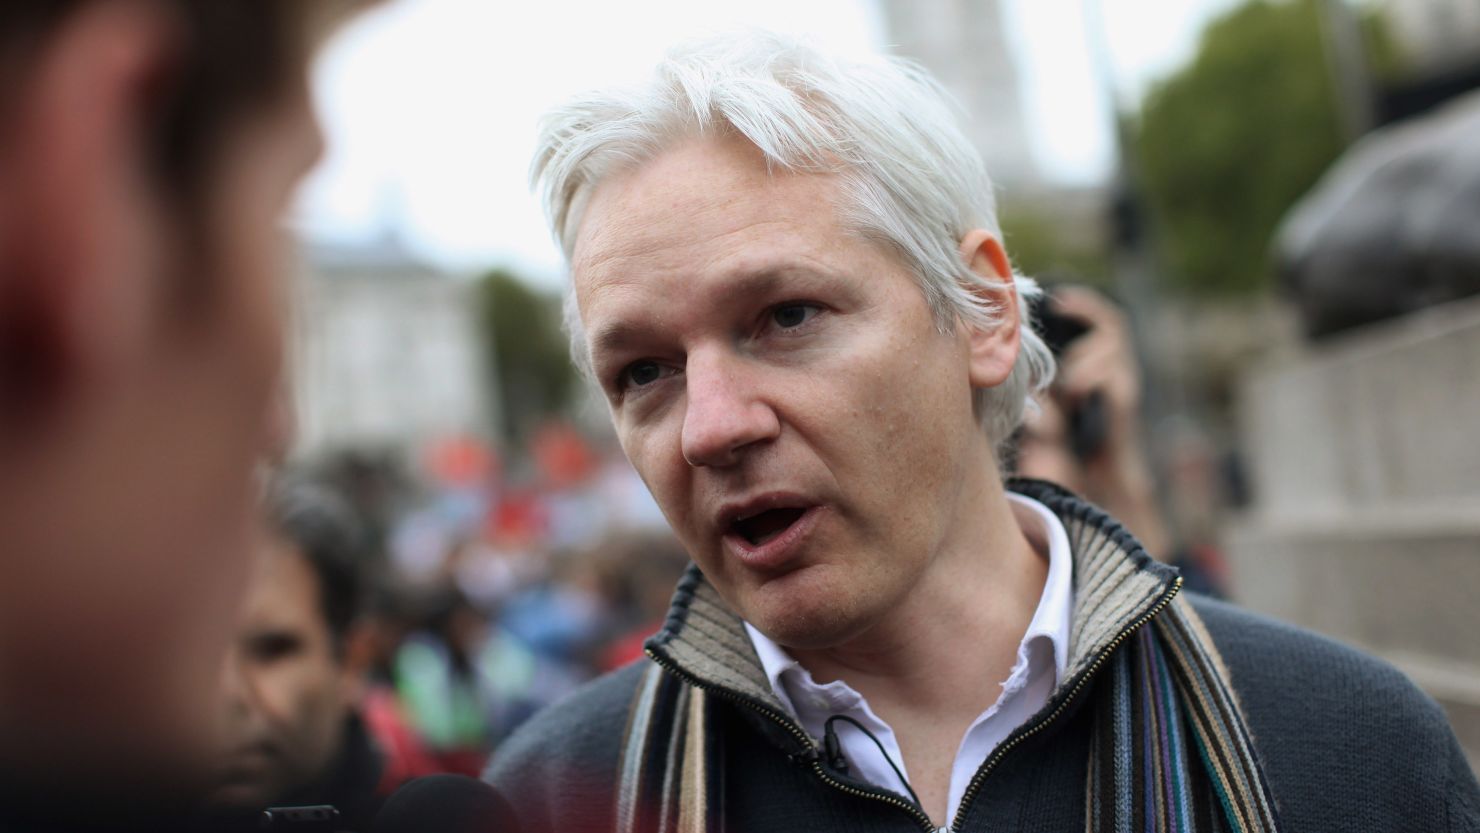 Julian Assange, has been living in the Ecuadorian Embassy in London since applying for political asylum on June 19.